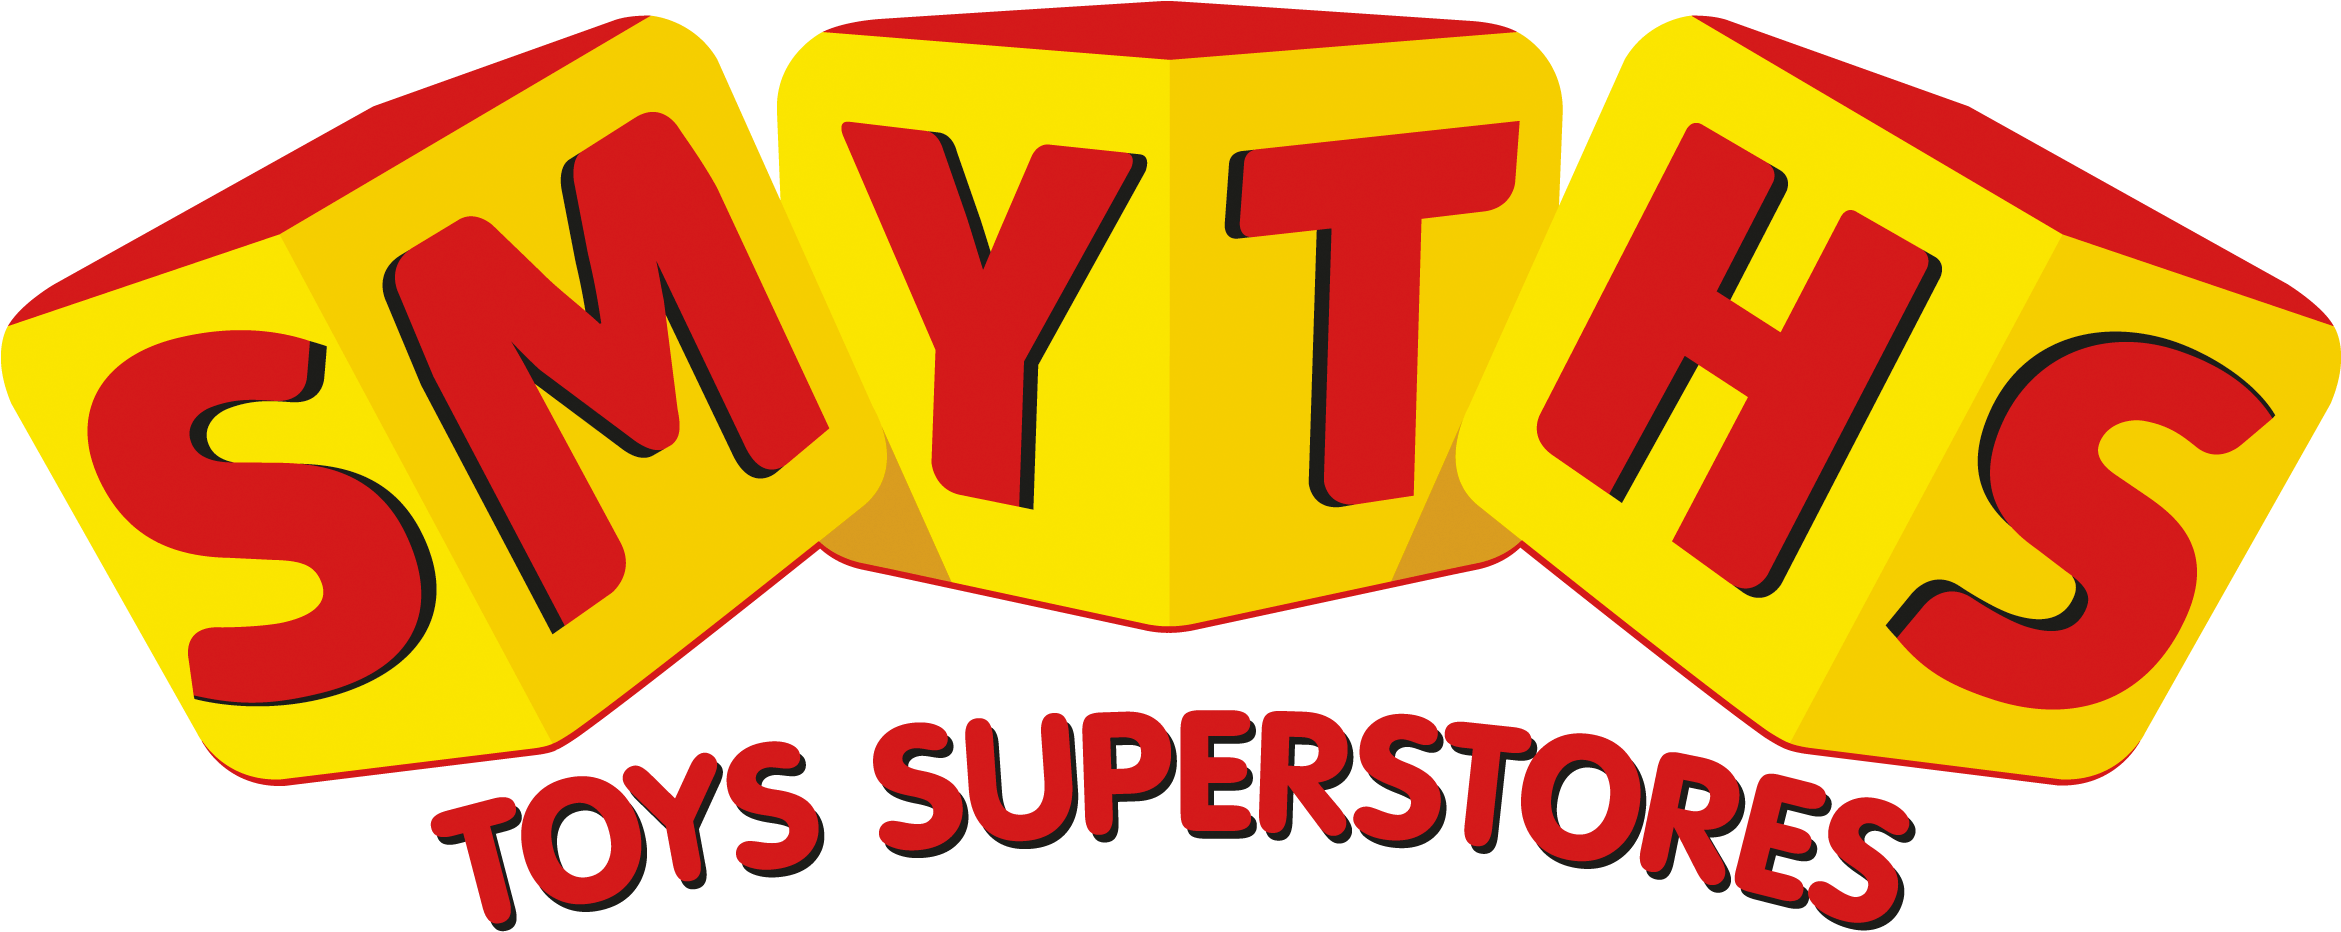 Smyths Toys Logo Smyths Toy Store Logo